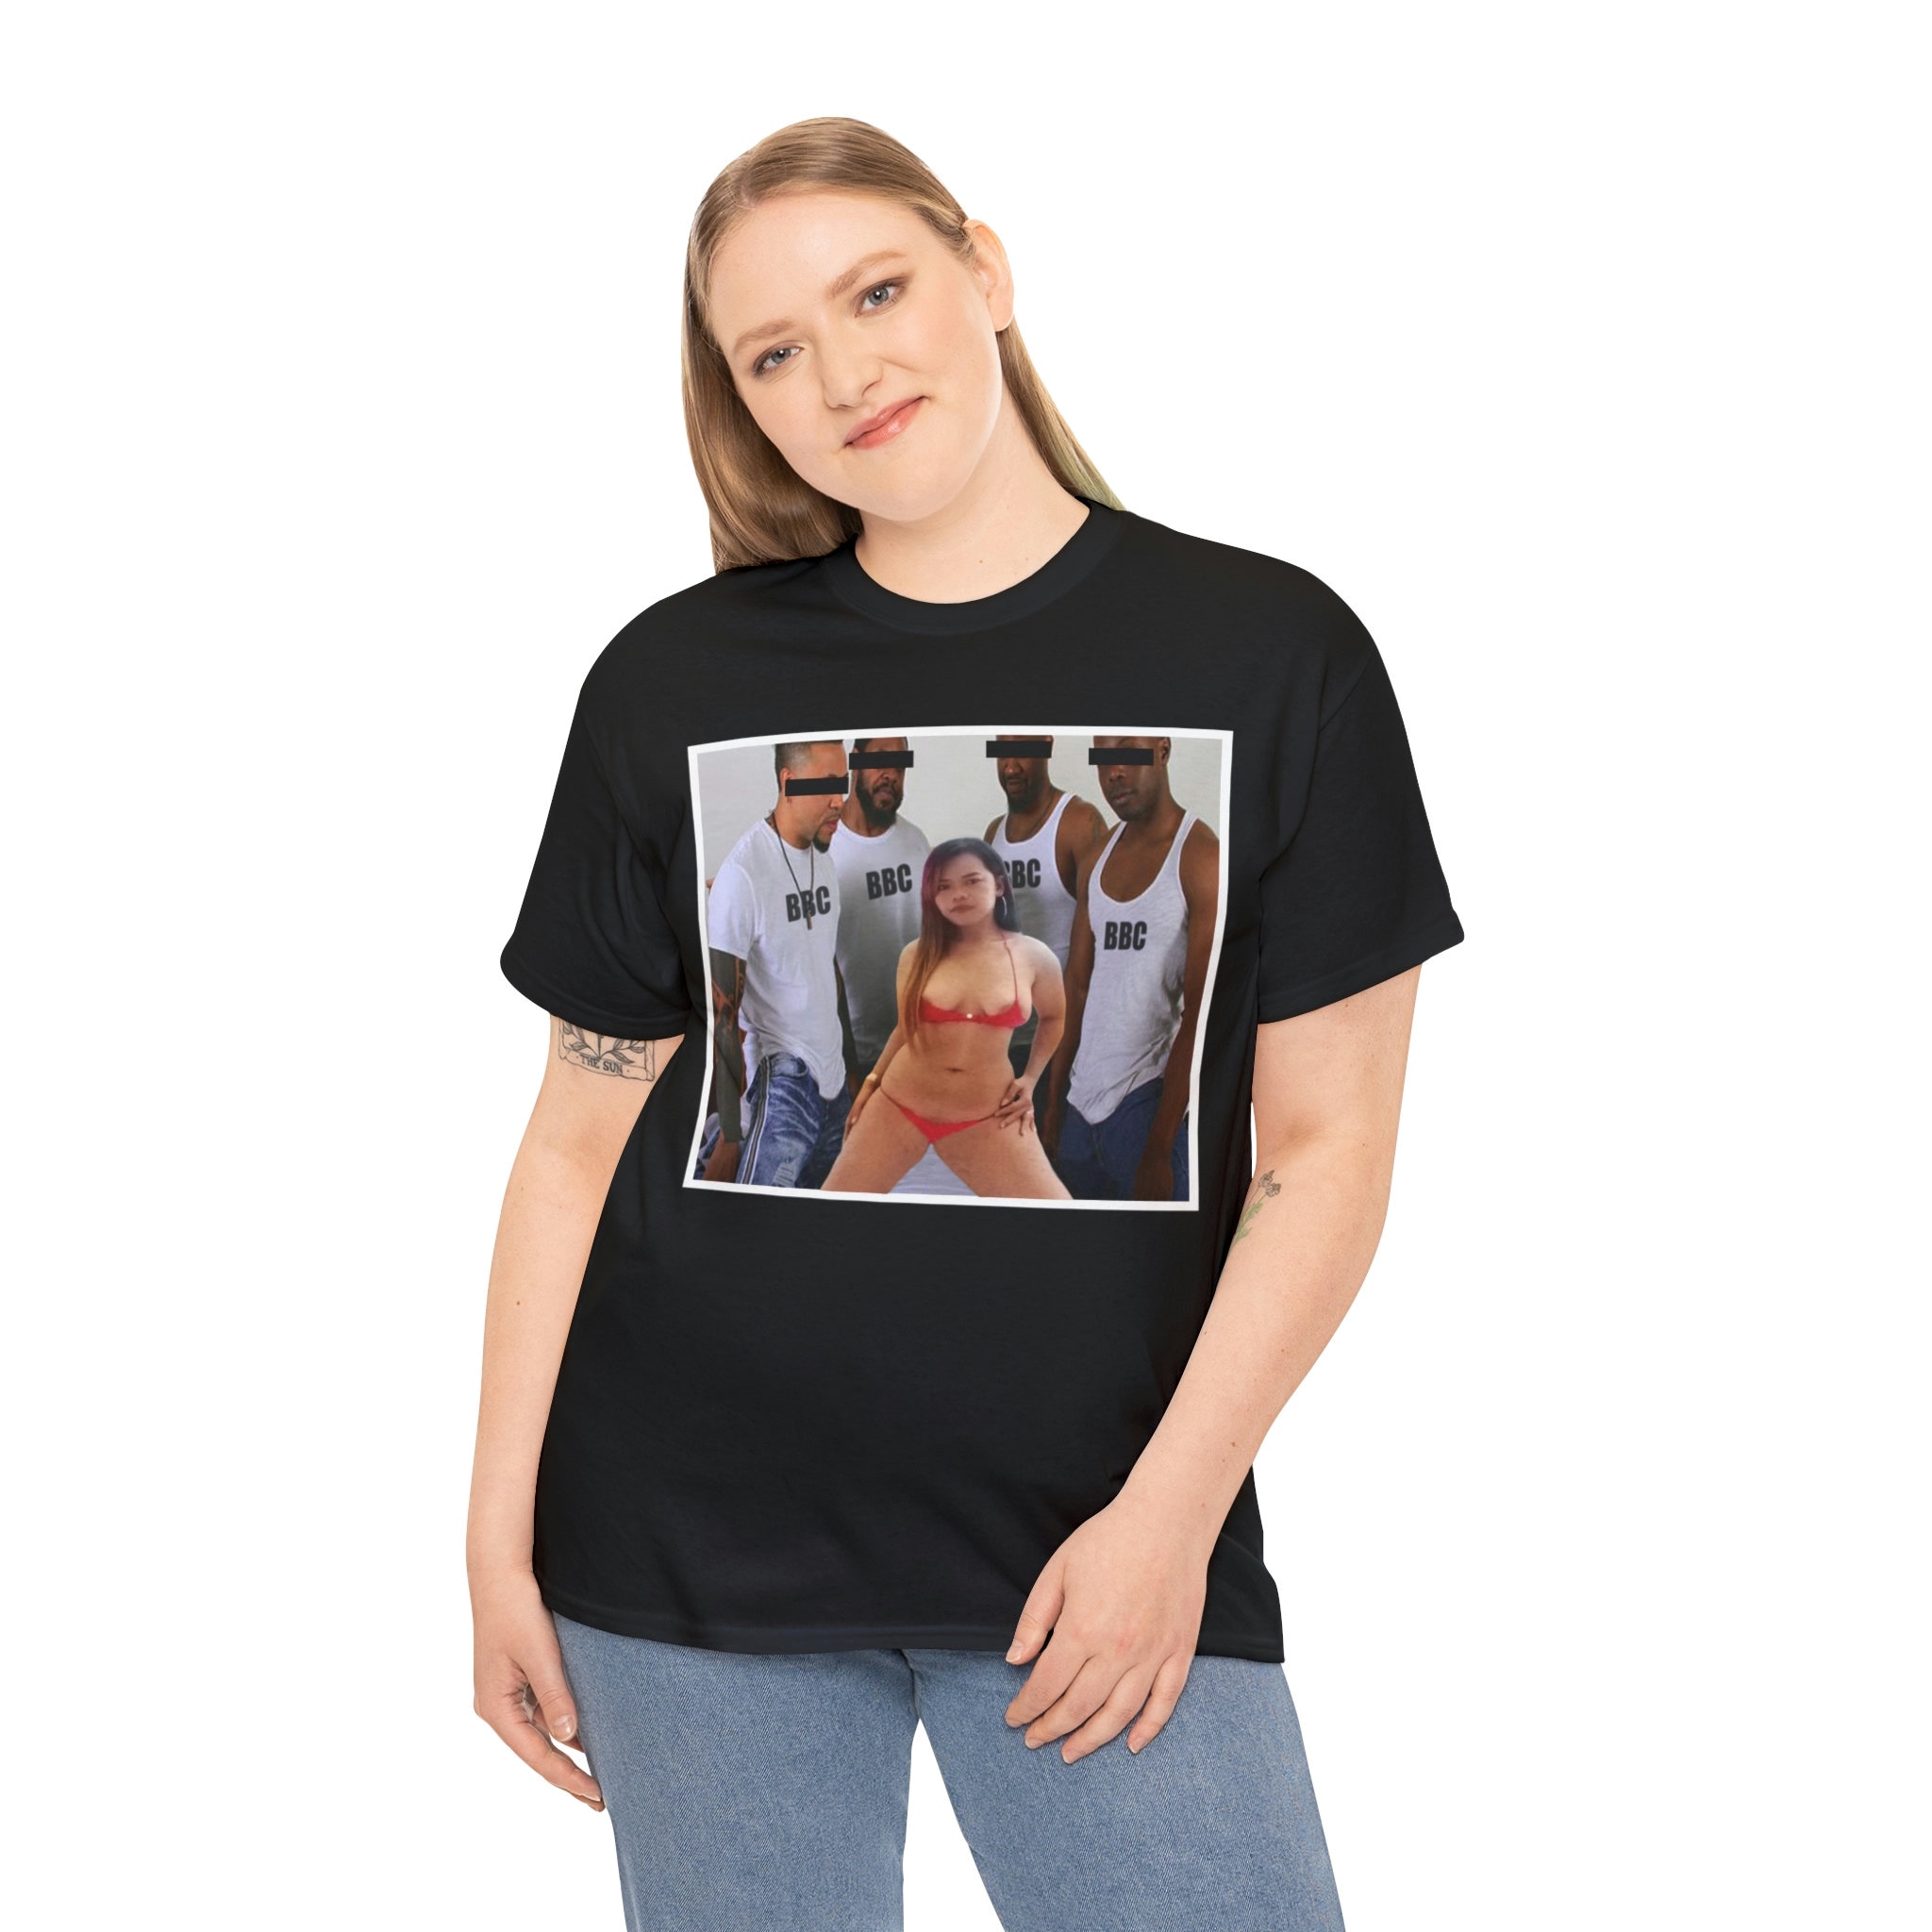 BBC T Shirt Queen of Spades T Shirt QOS Shirt Slut Wife - Etsy